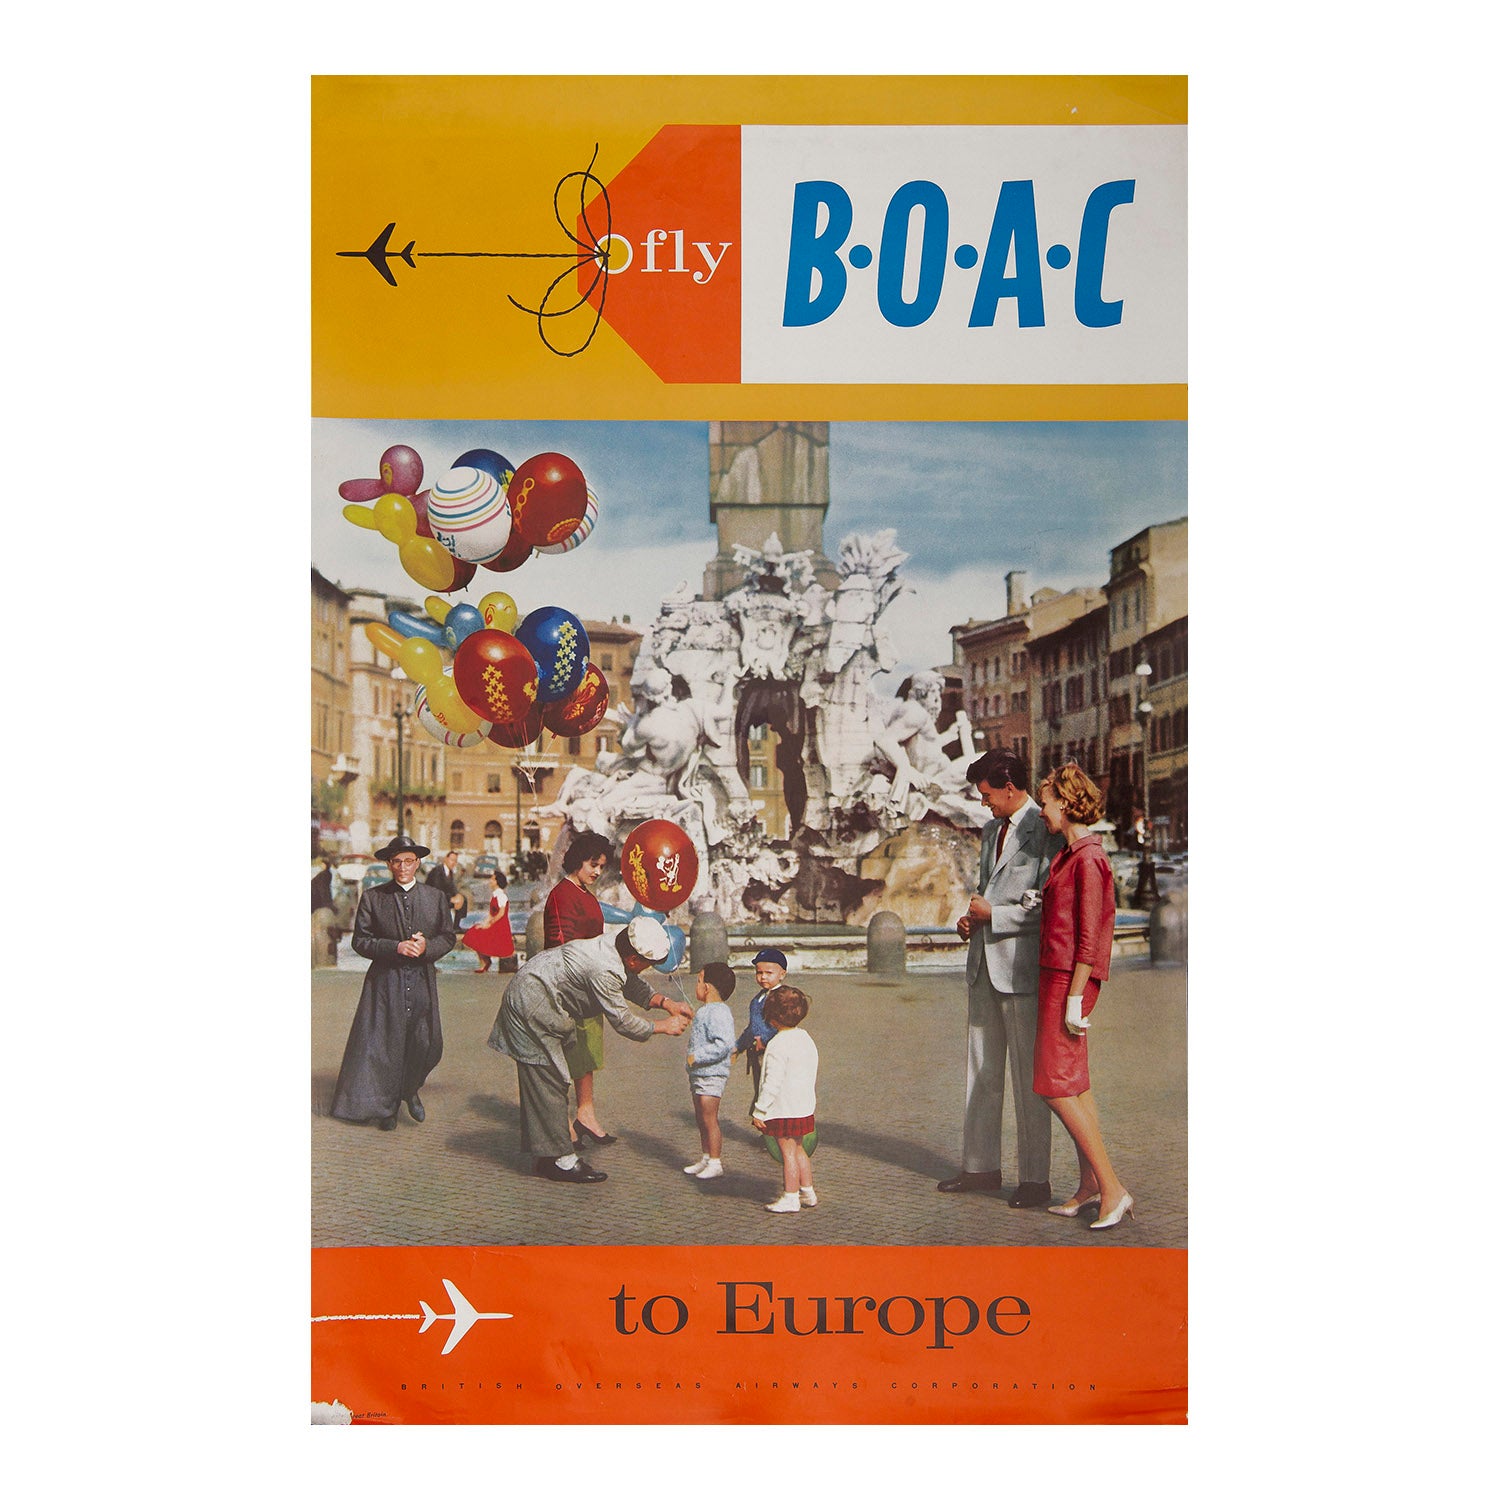 BOAC To Europe